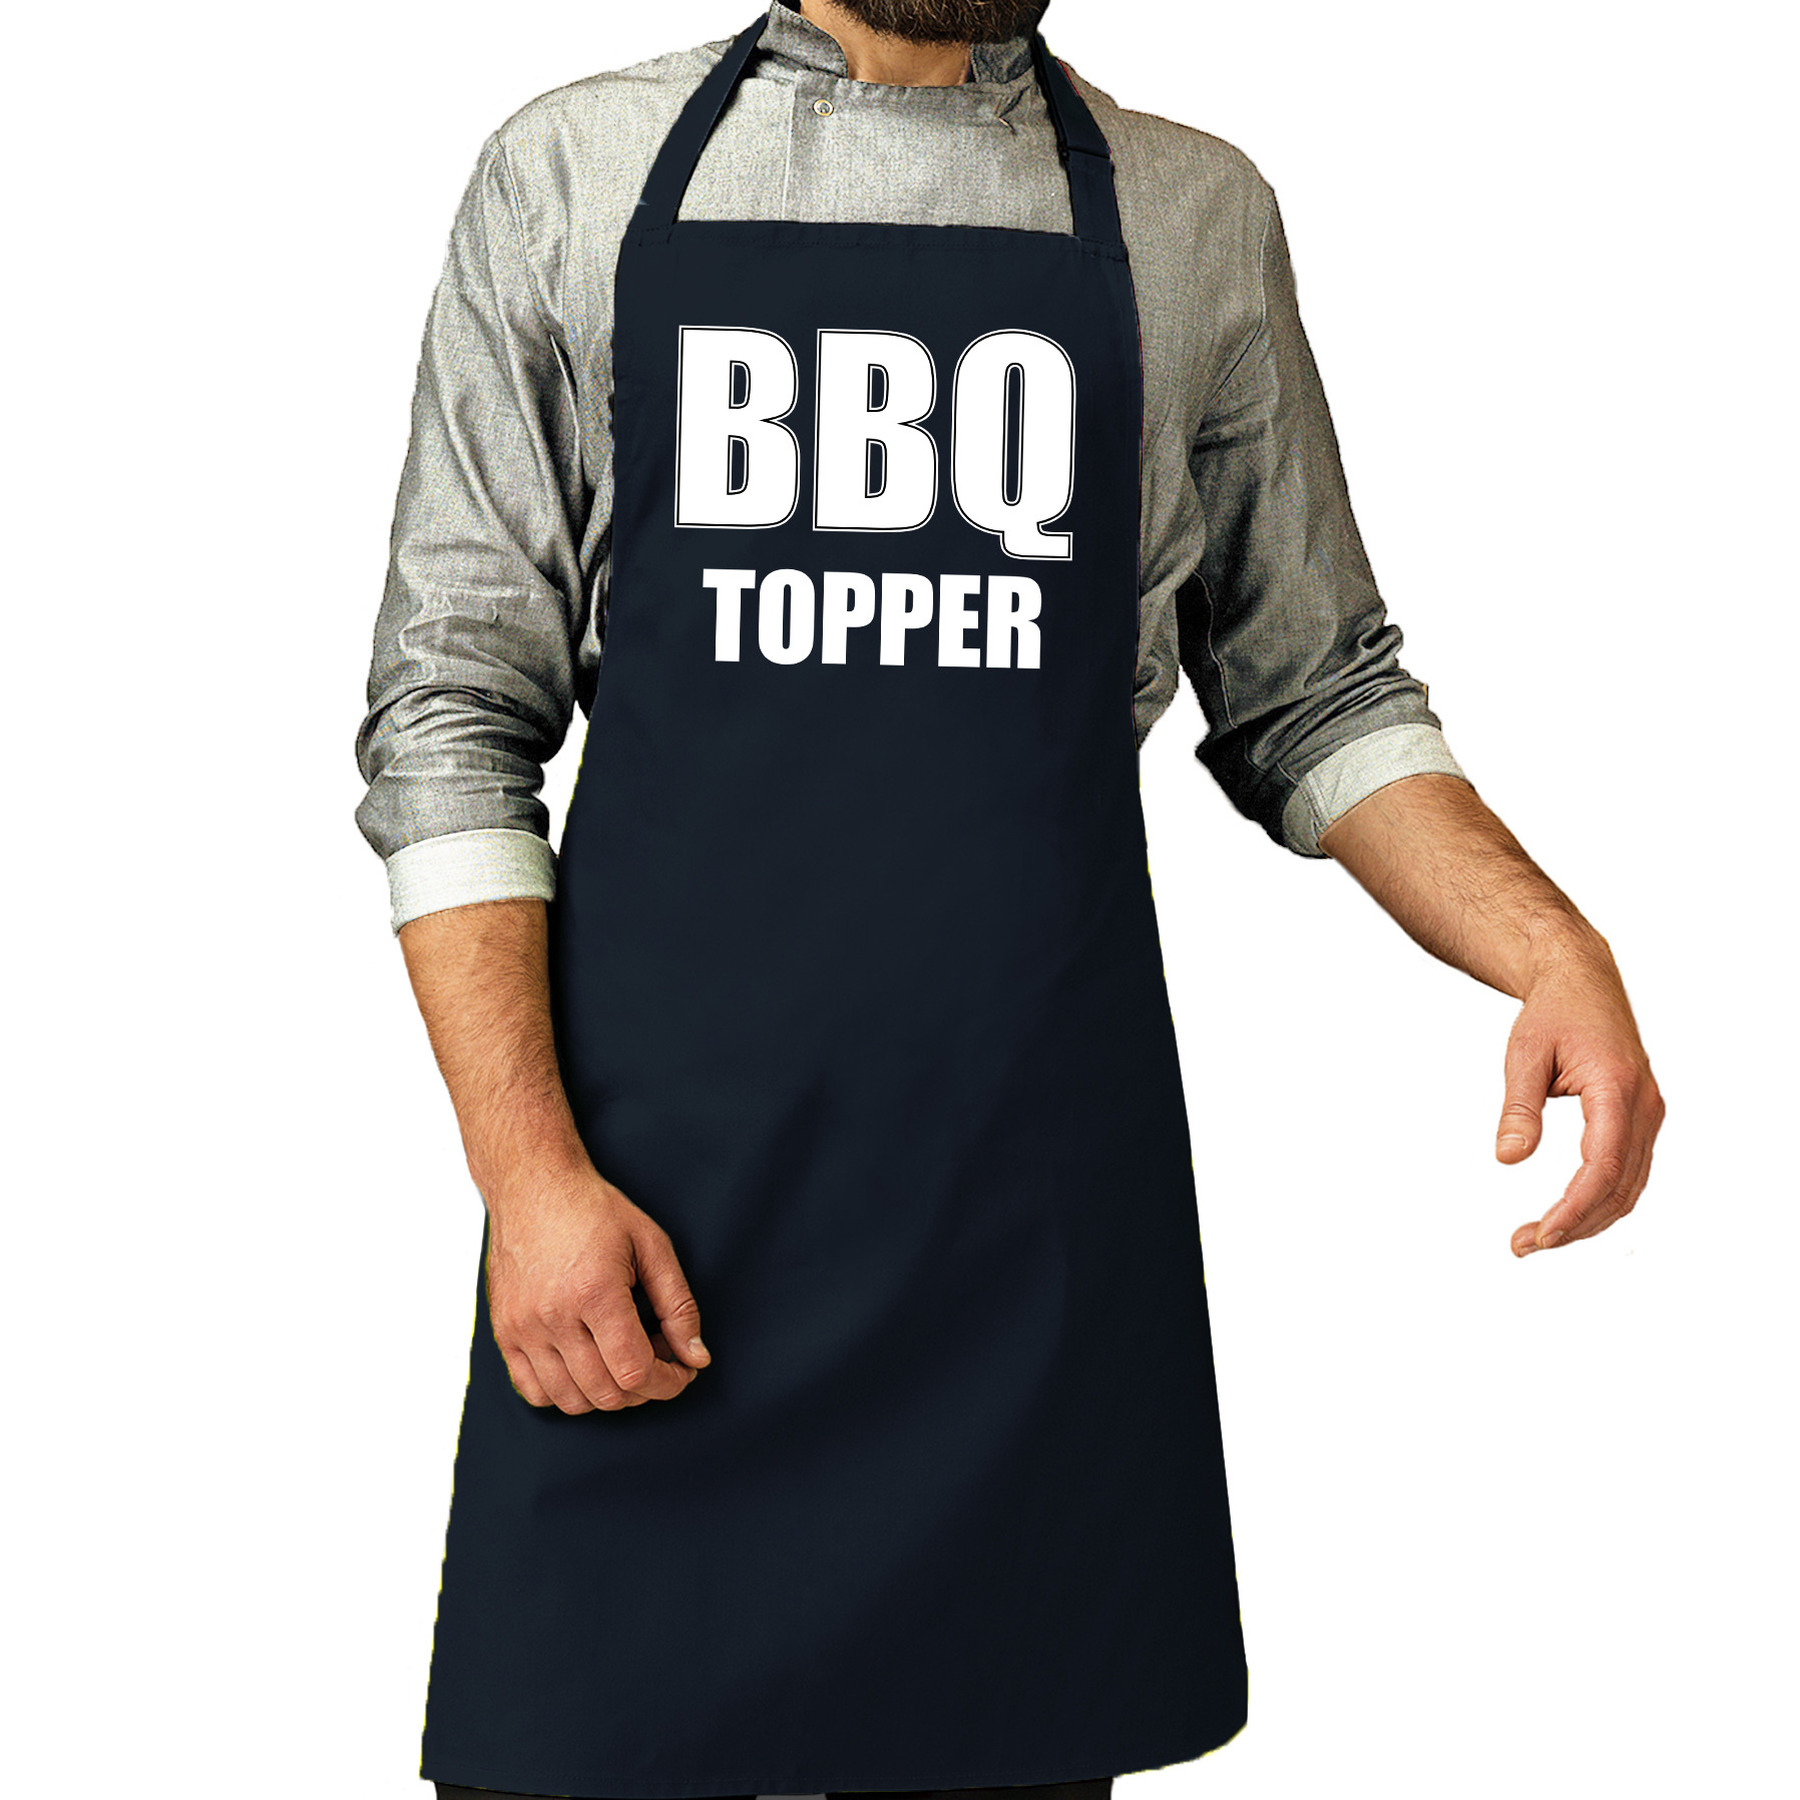 BBQ Topper barbecueschort heren navy -